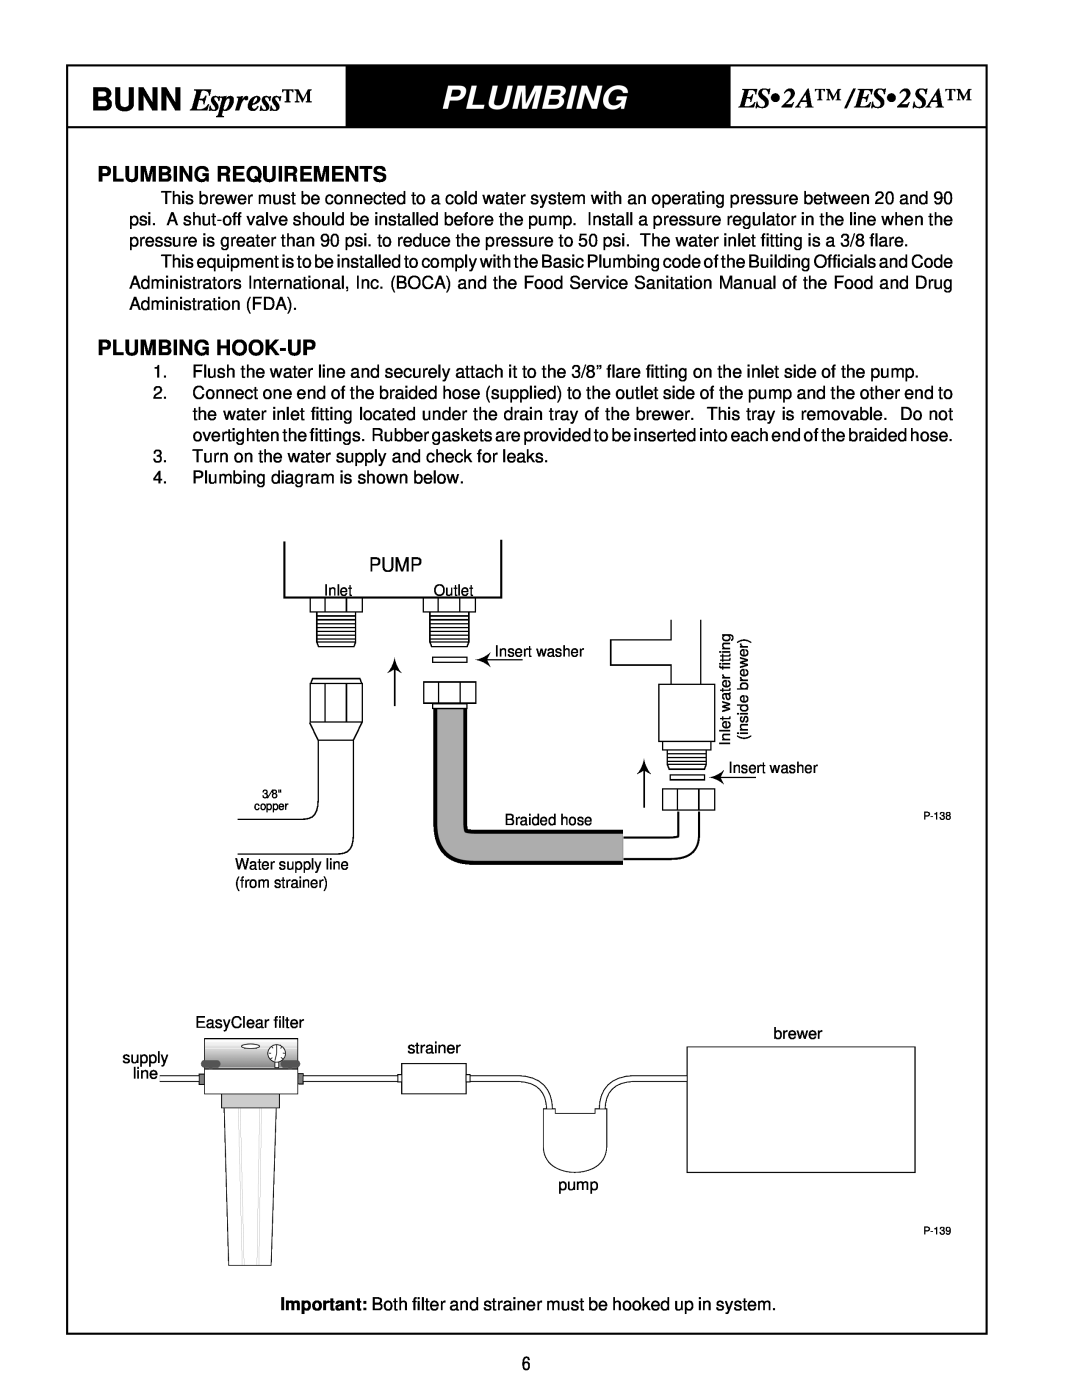 Bunn service manual Plumbing Requirements, Plumbing Hook-Up, BUNN Espress, ES2A/ES2SA 